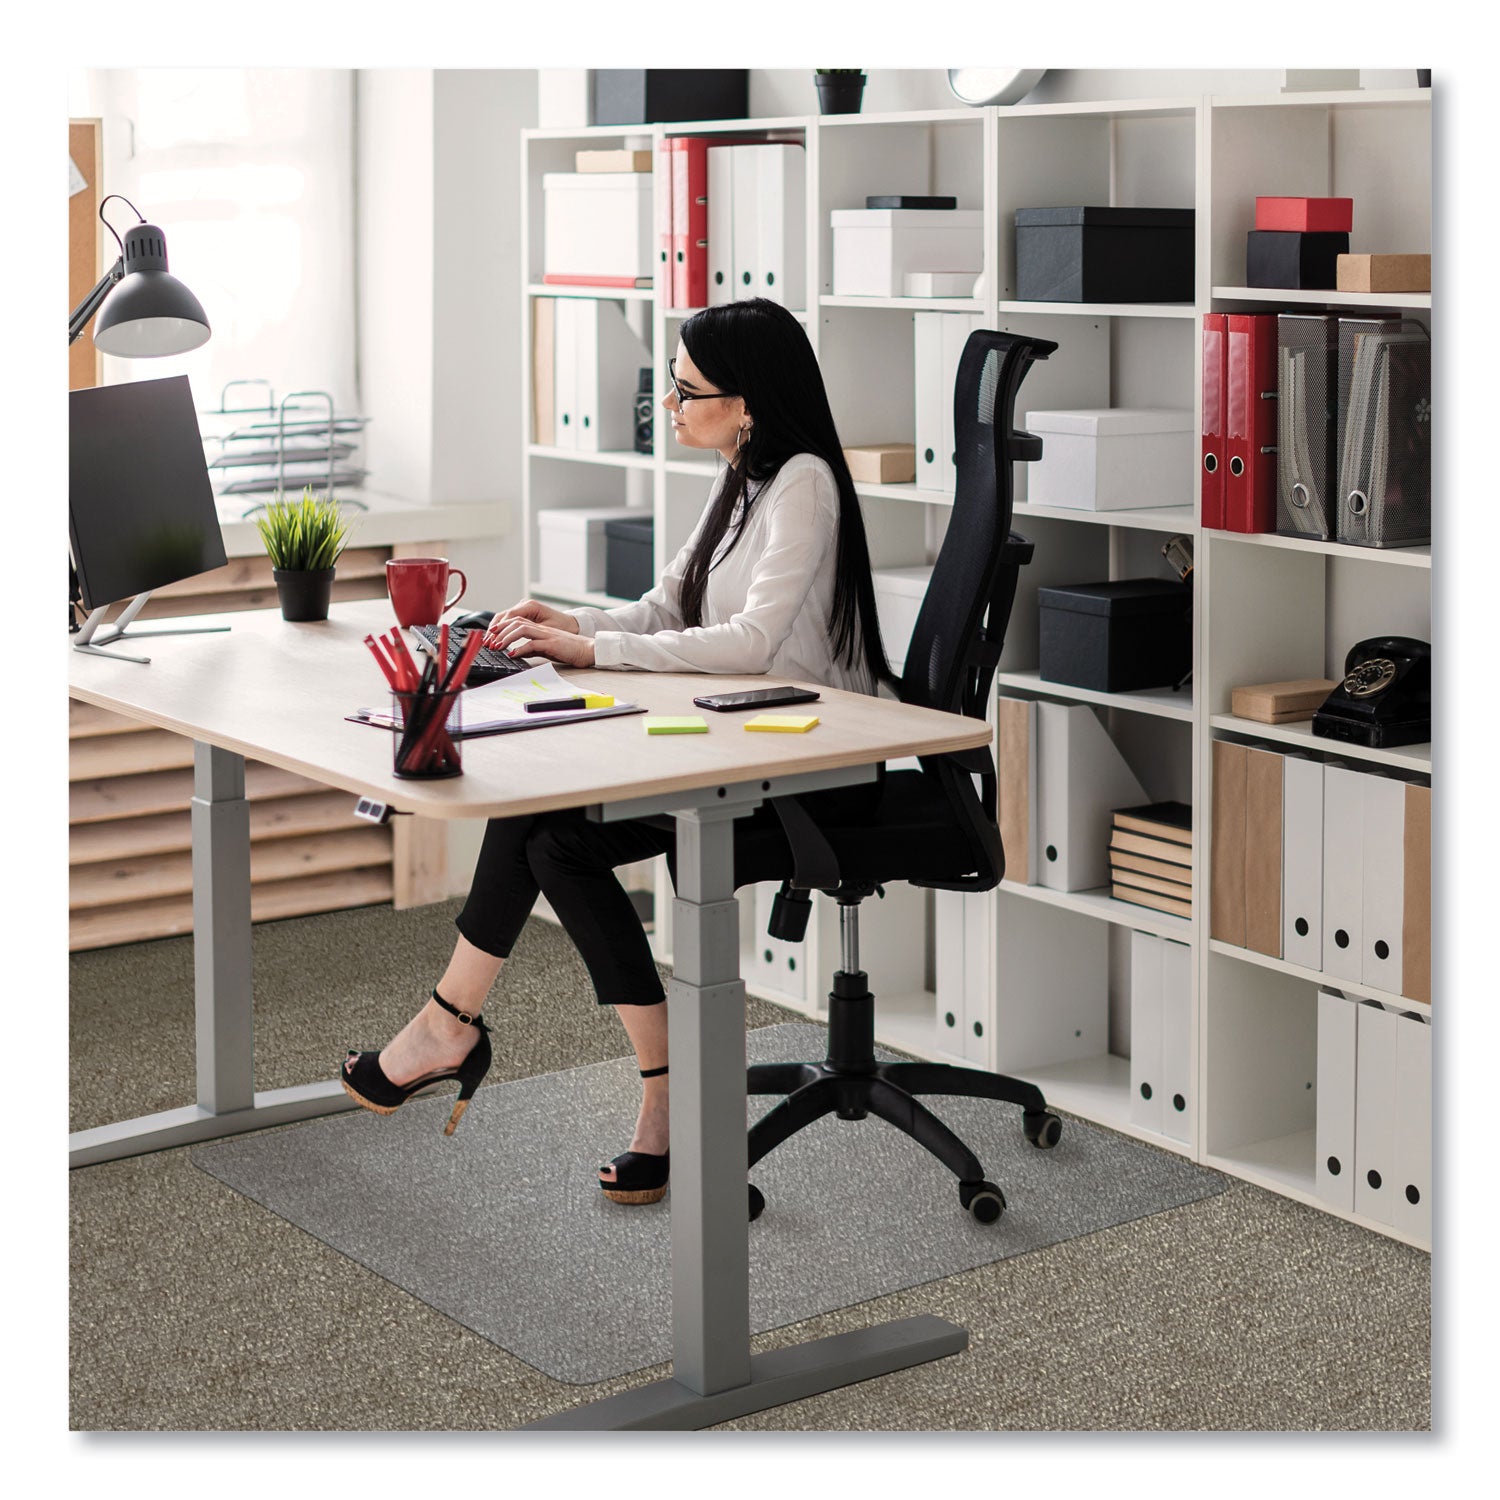 cleartex-ultimat-polycarbonate-chair-mat-for-low-medium-pile-carpet-35-x-47-clear_flrec118923er - 1